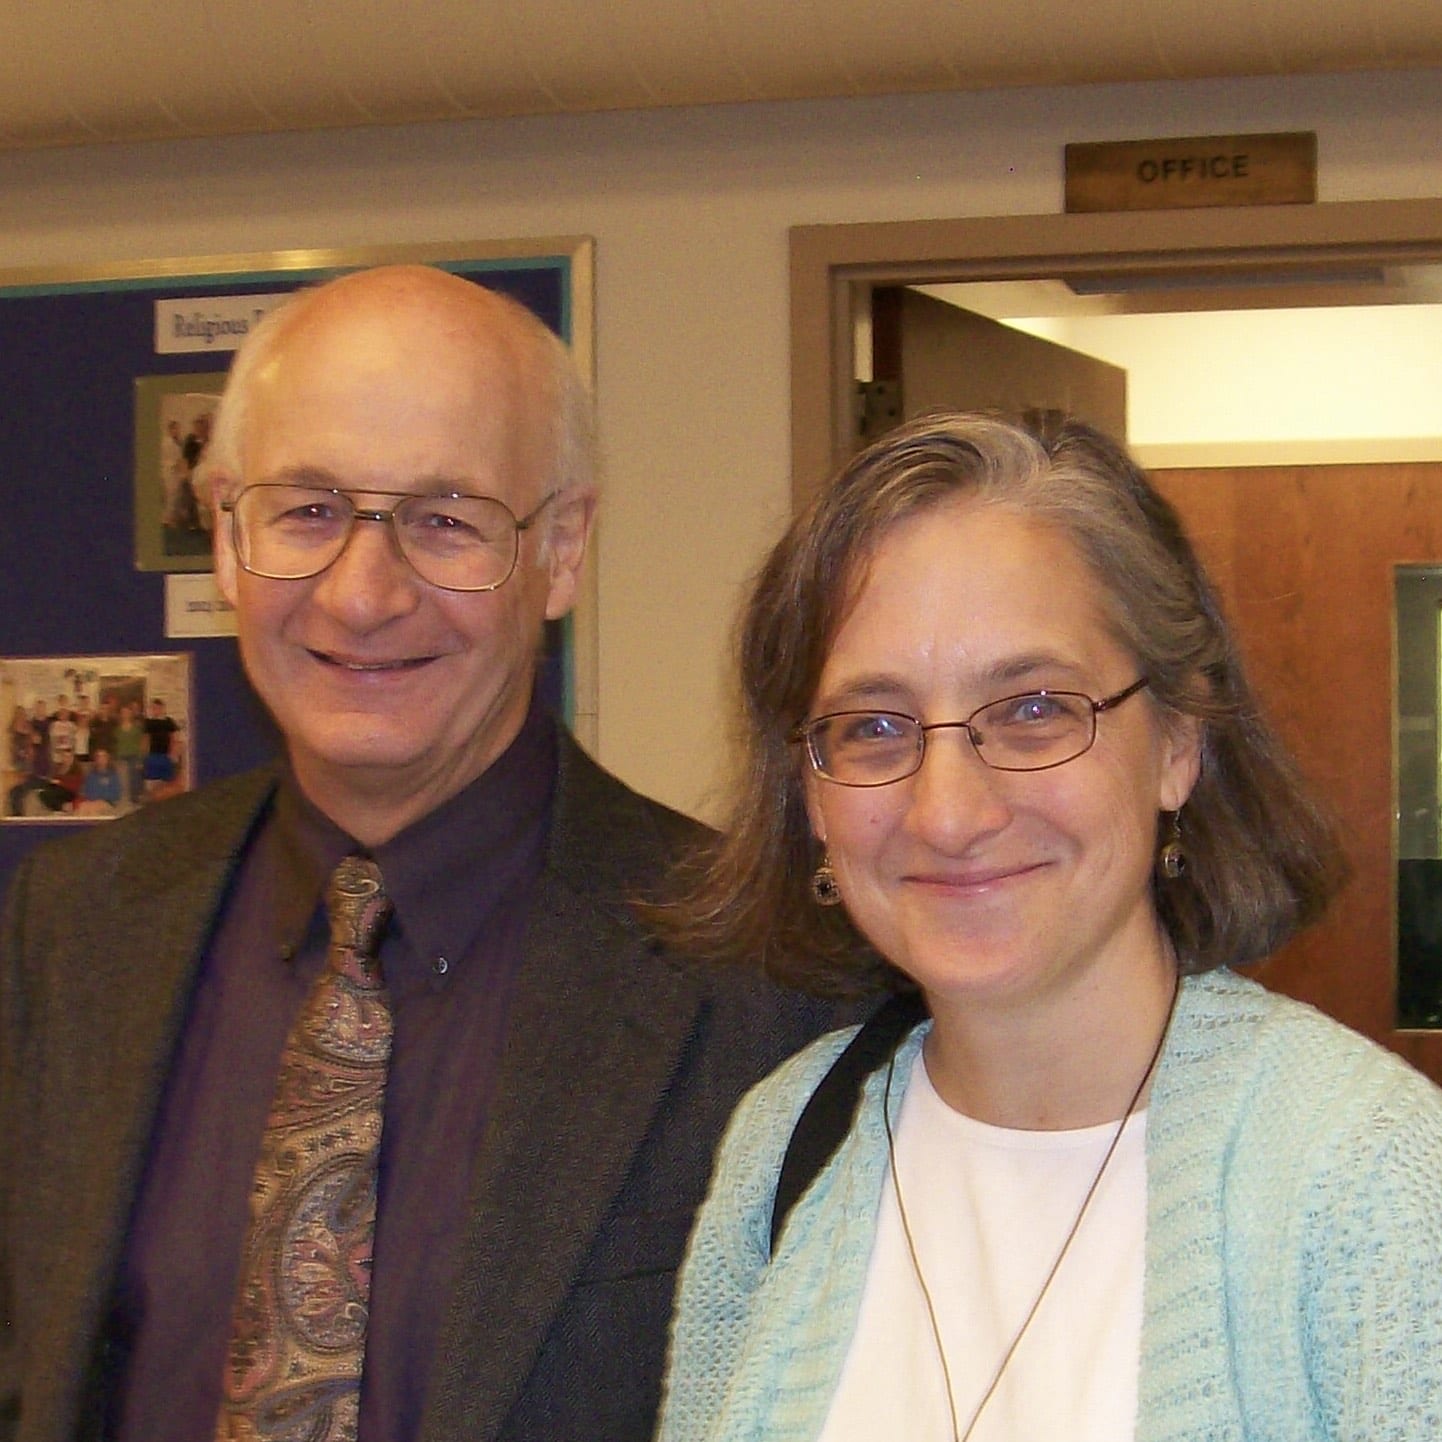 Bob Foote and Karen Retzer